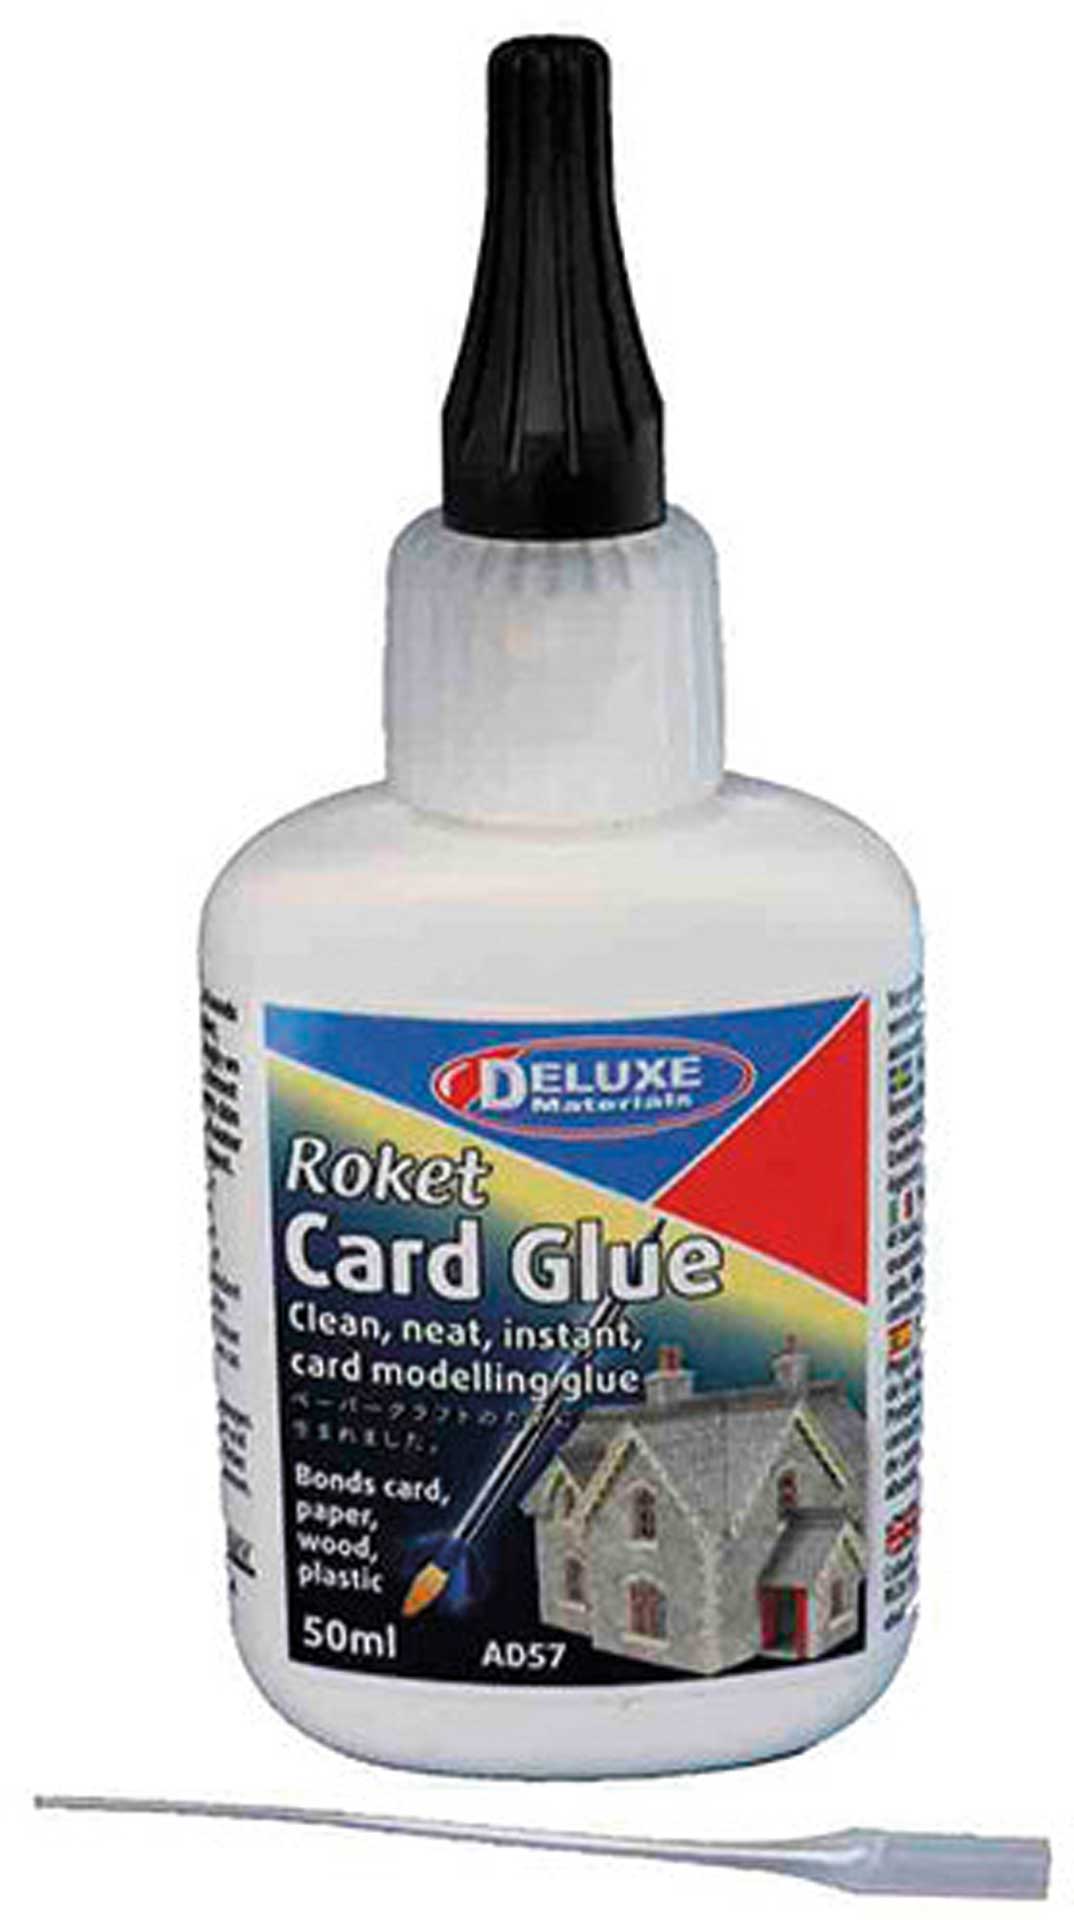 DELUXE Roket Card Glue 50ml pour carton, papier. etc.